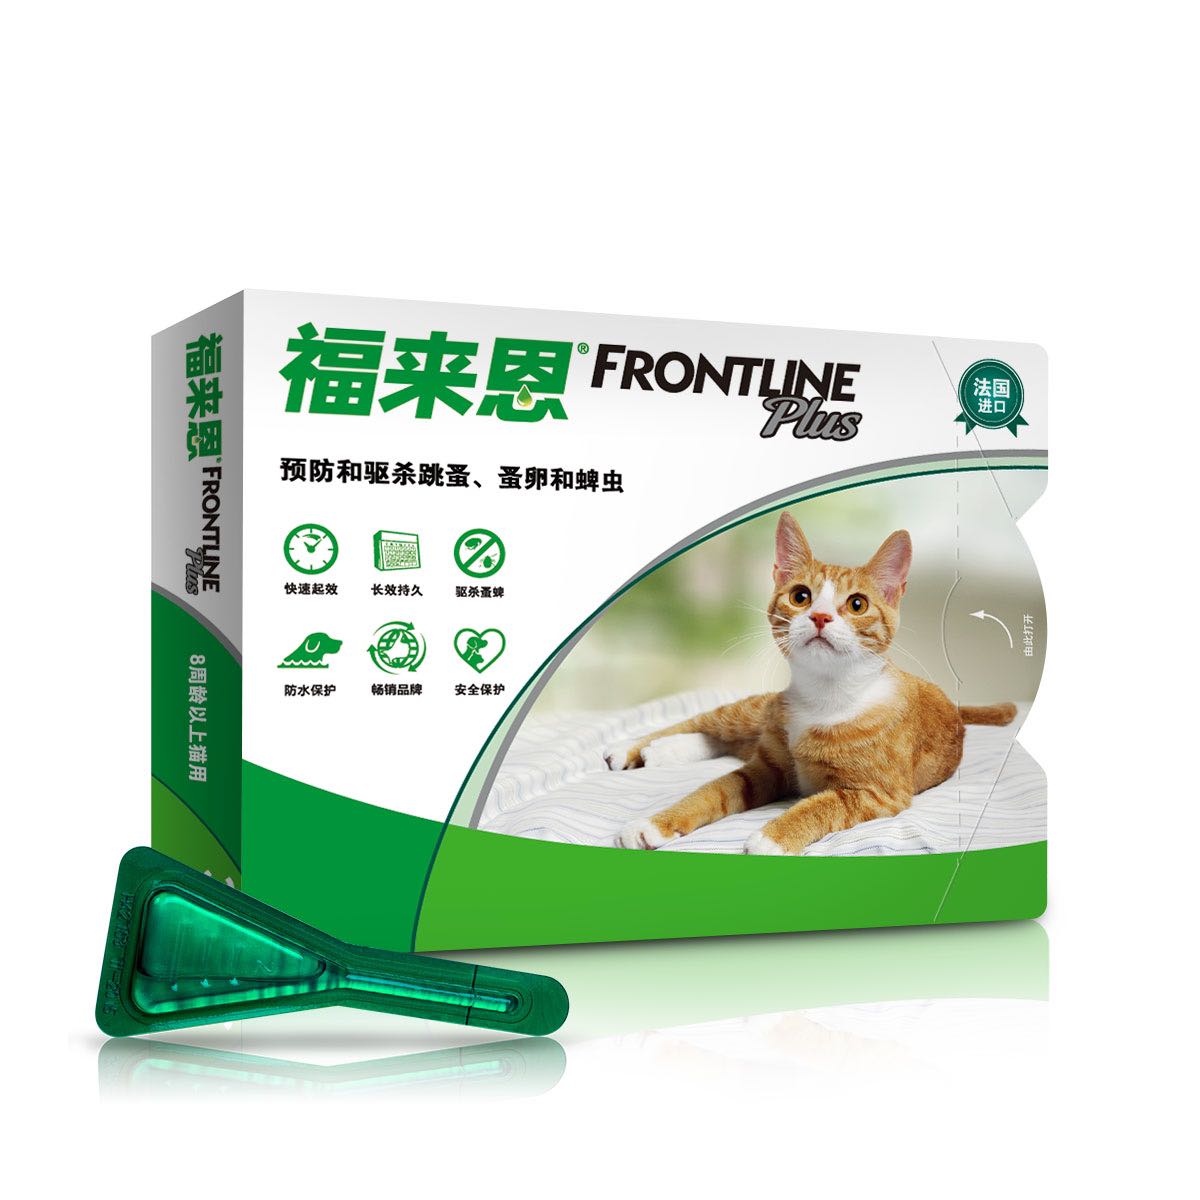 FRONTLINE 福来恩 猫体外驱虫滴剂 宠物猫咪去跳蚤蜱虫法国进口 整盒0.5ml*3支